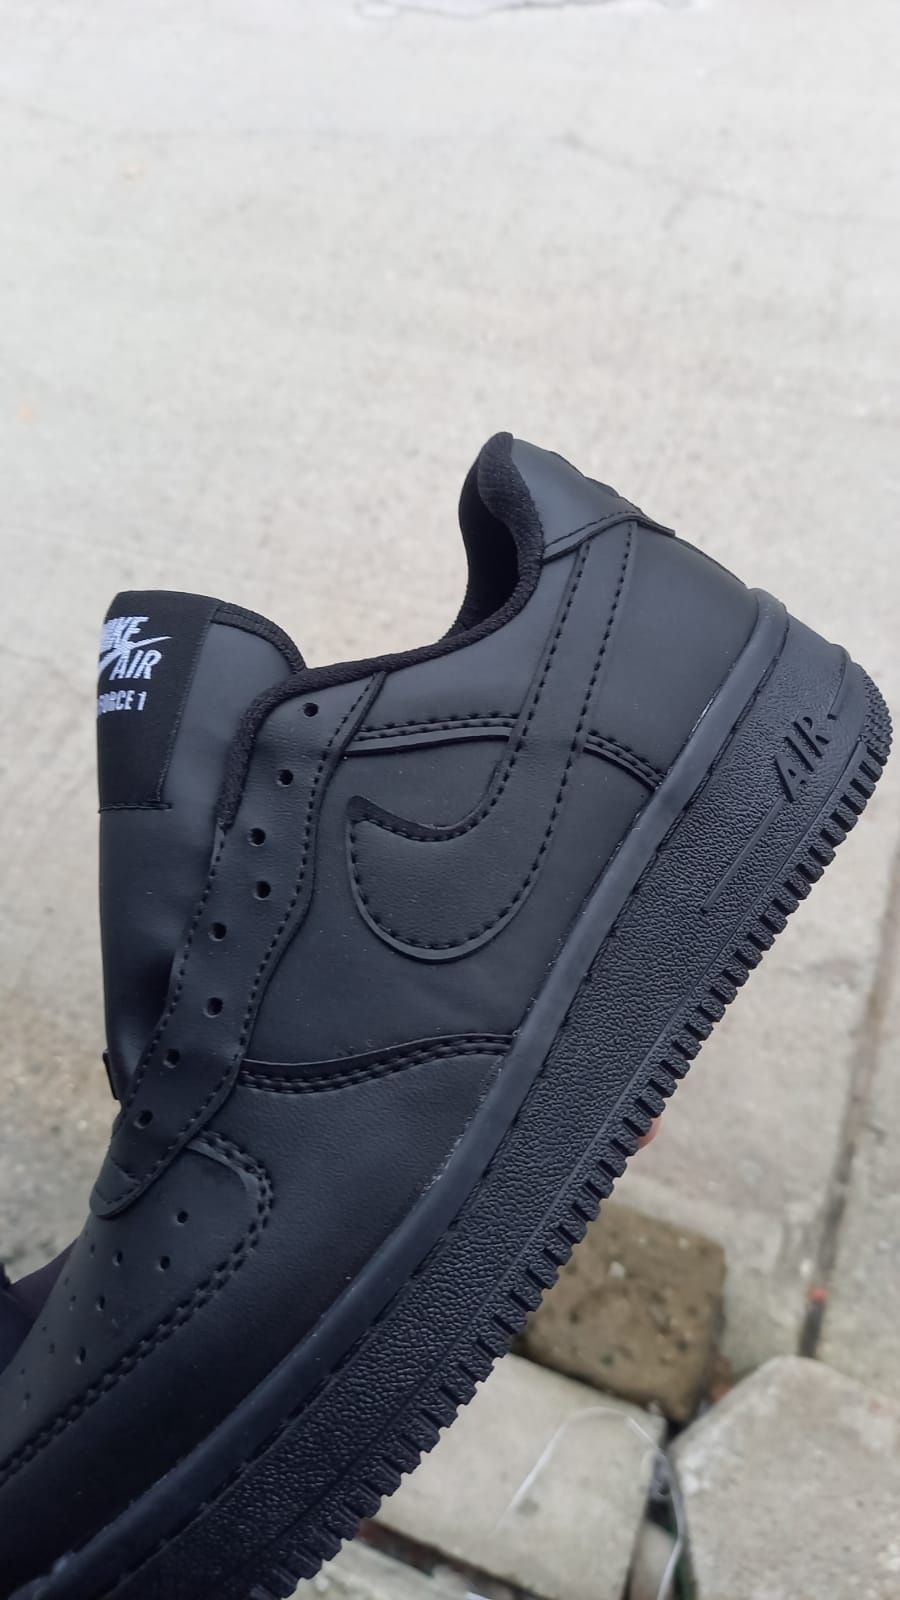 Nike Air Force 1 czarne